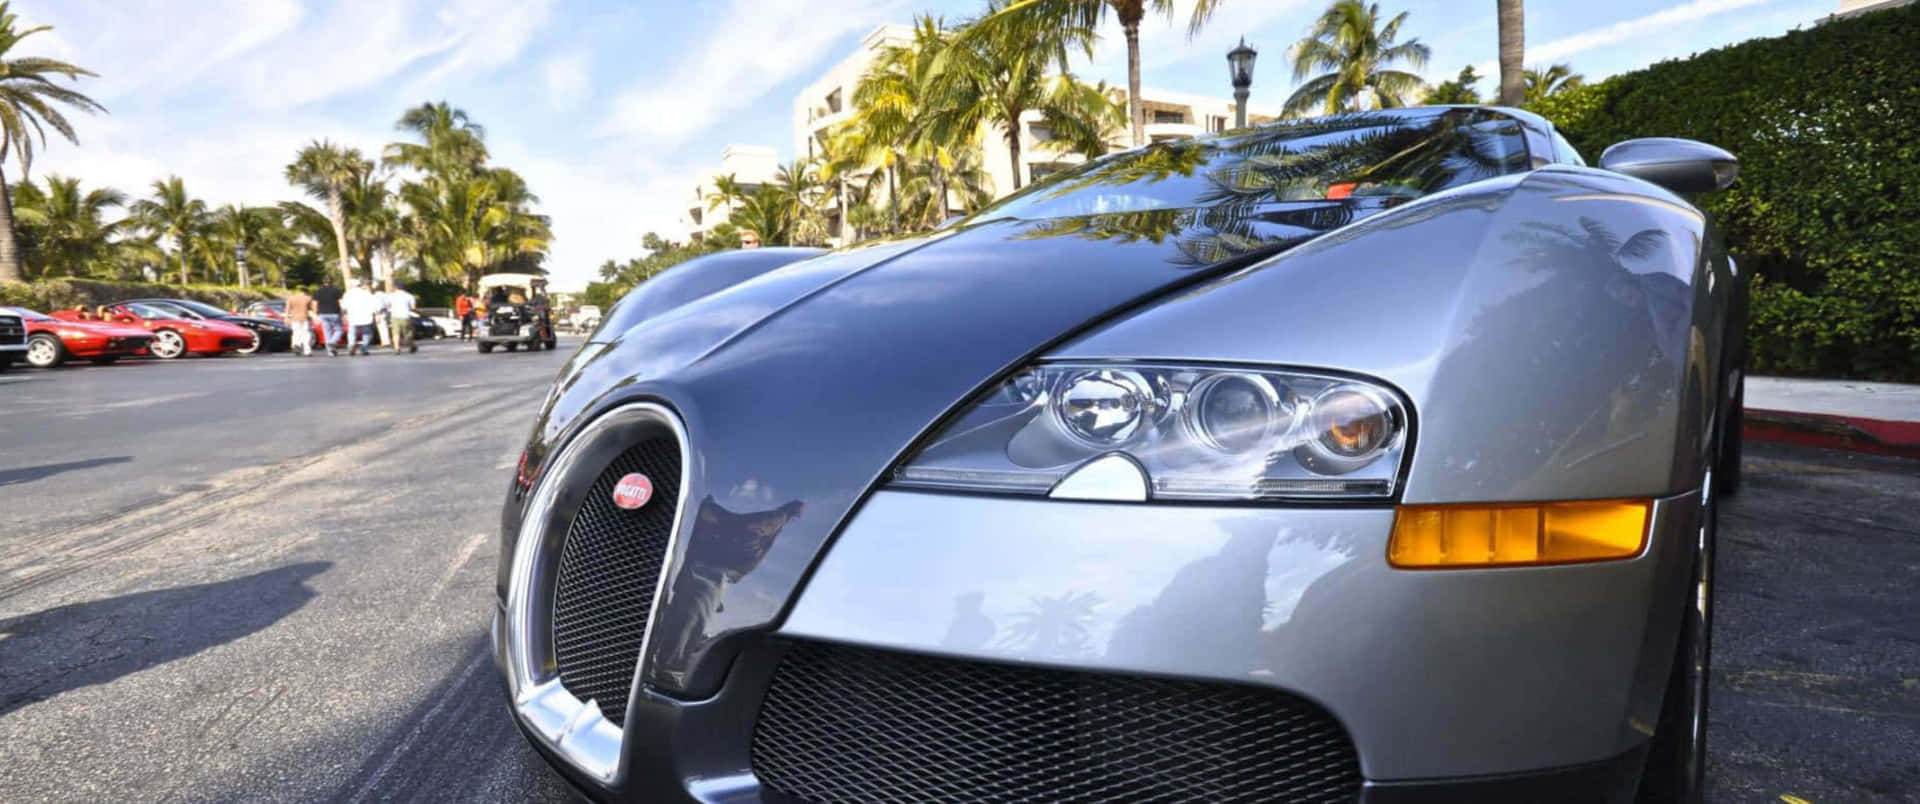 A Stunning Look at a Luxurious Bugatti